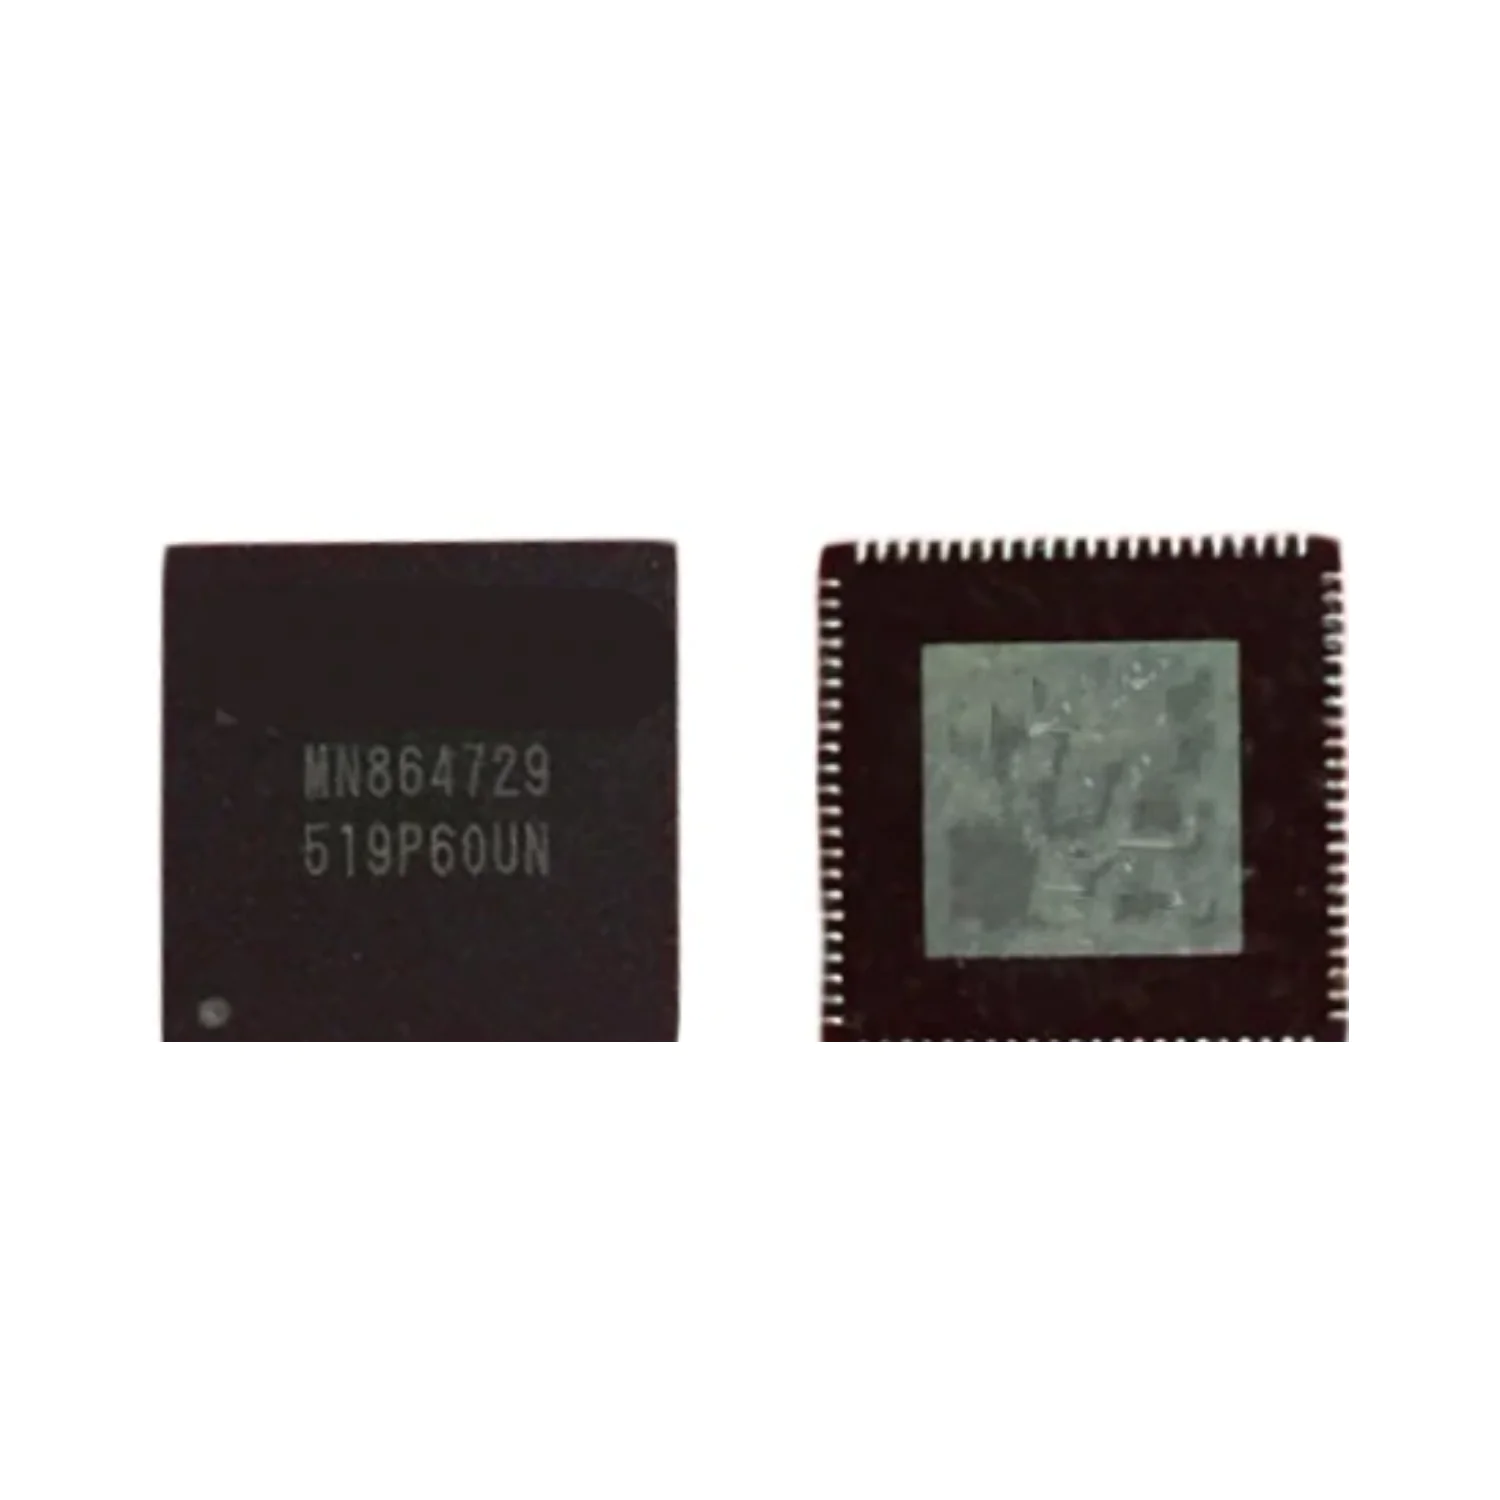 Puce IC (Circuit Intégré) Sony PS4 Slim / PS4 Pro 1200 / MN864729 / HDMI